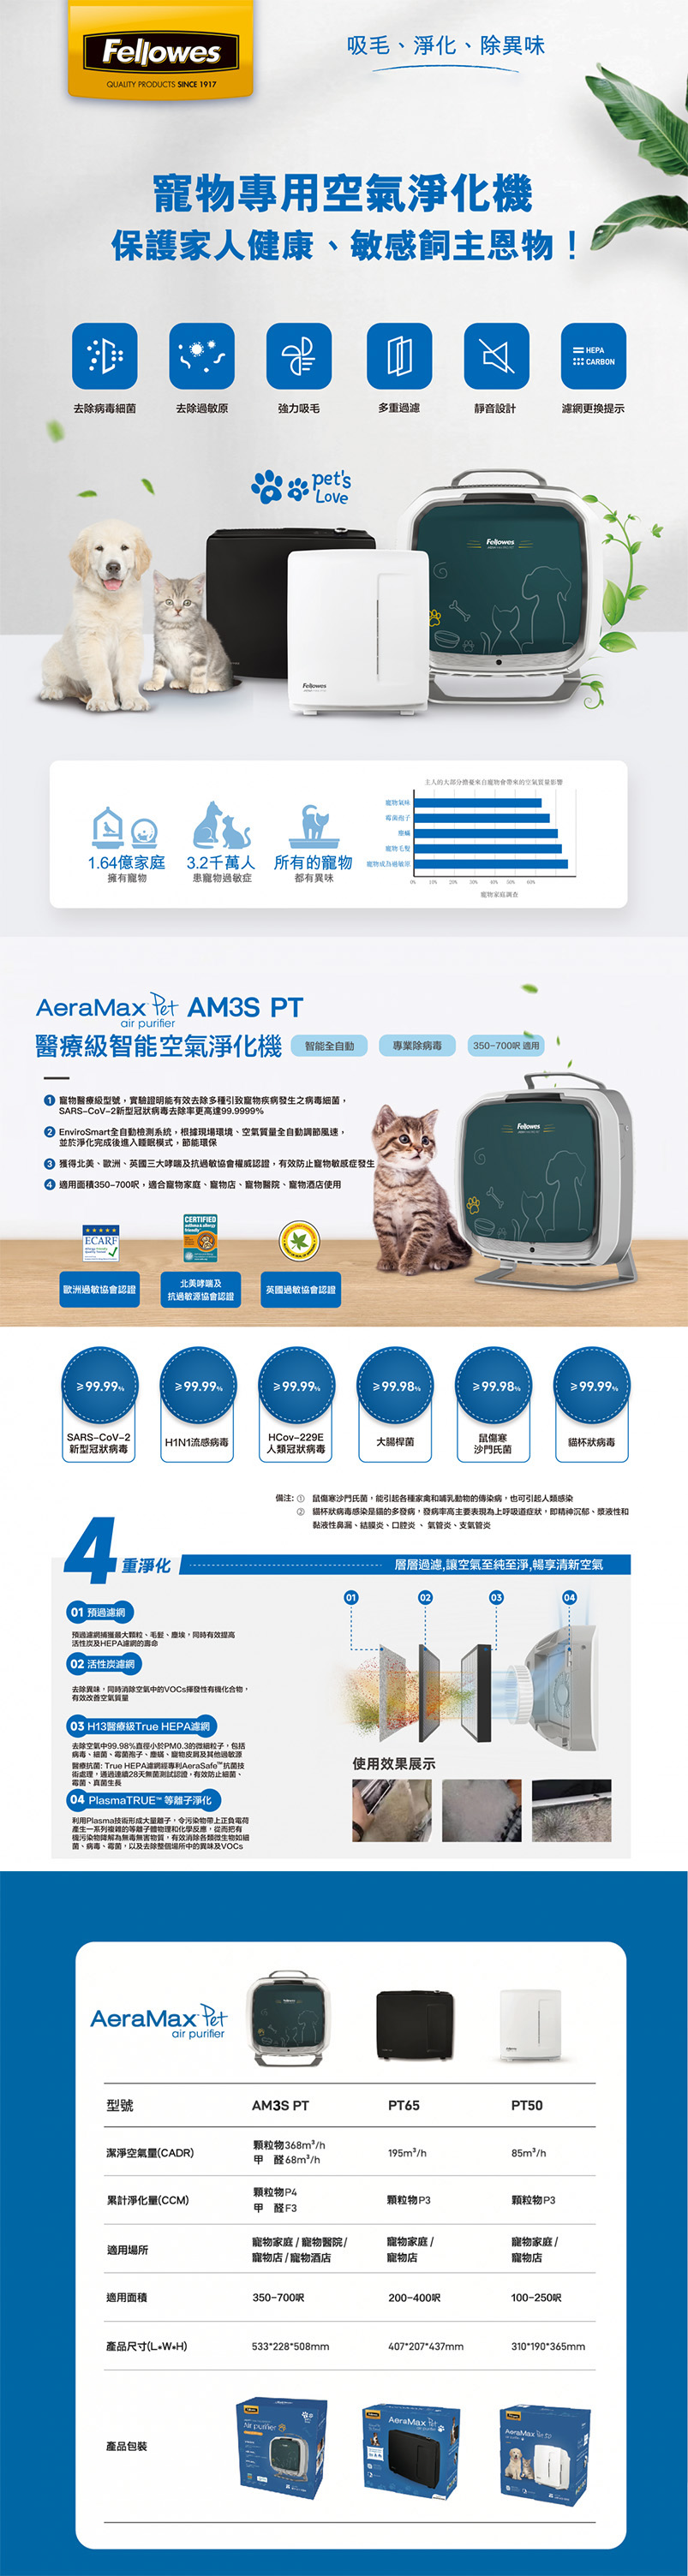  AeraMax Pro AM3PT medical-grade pet-specific smart air purifier